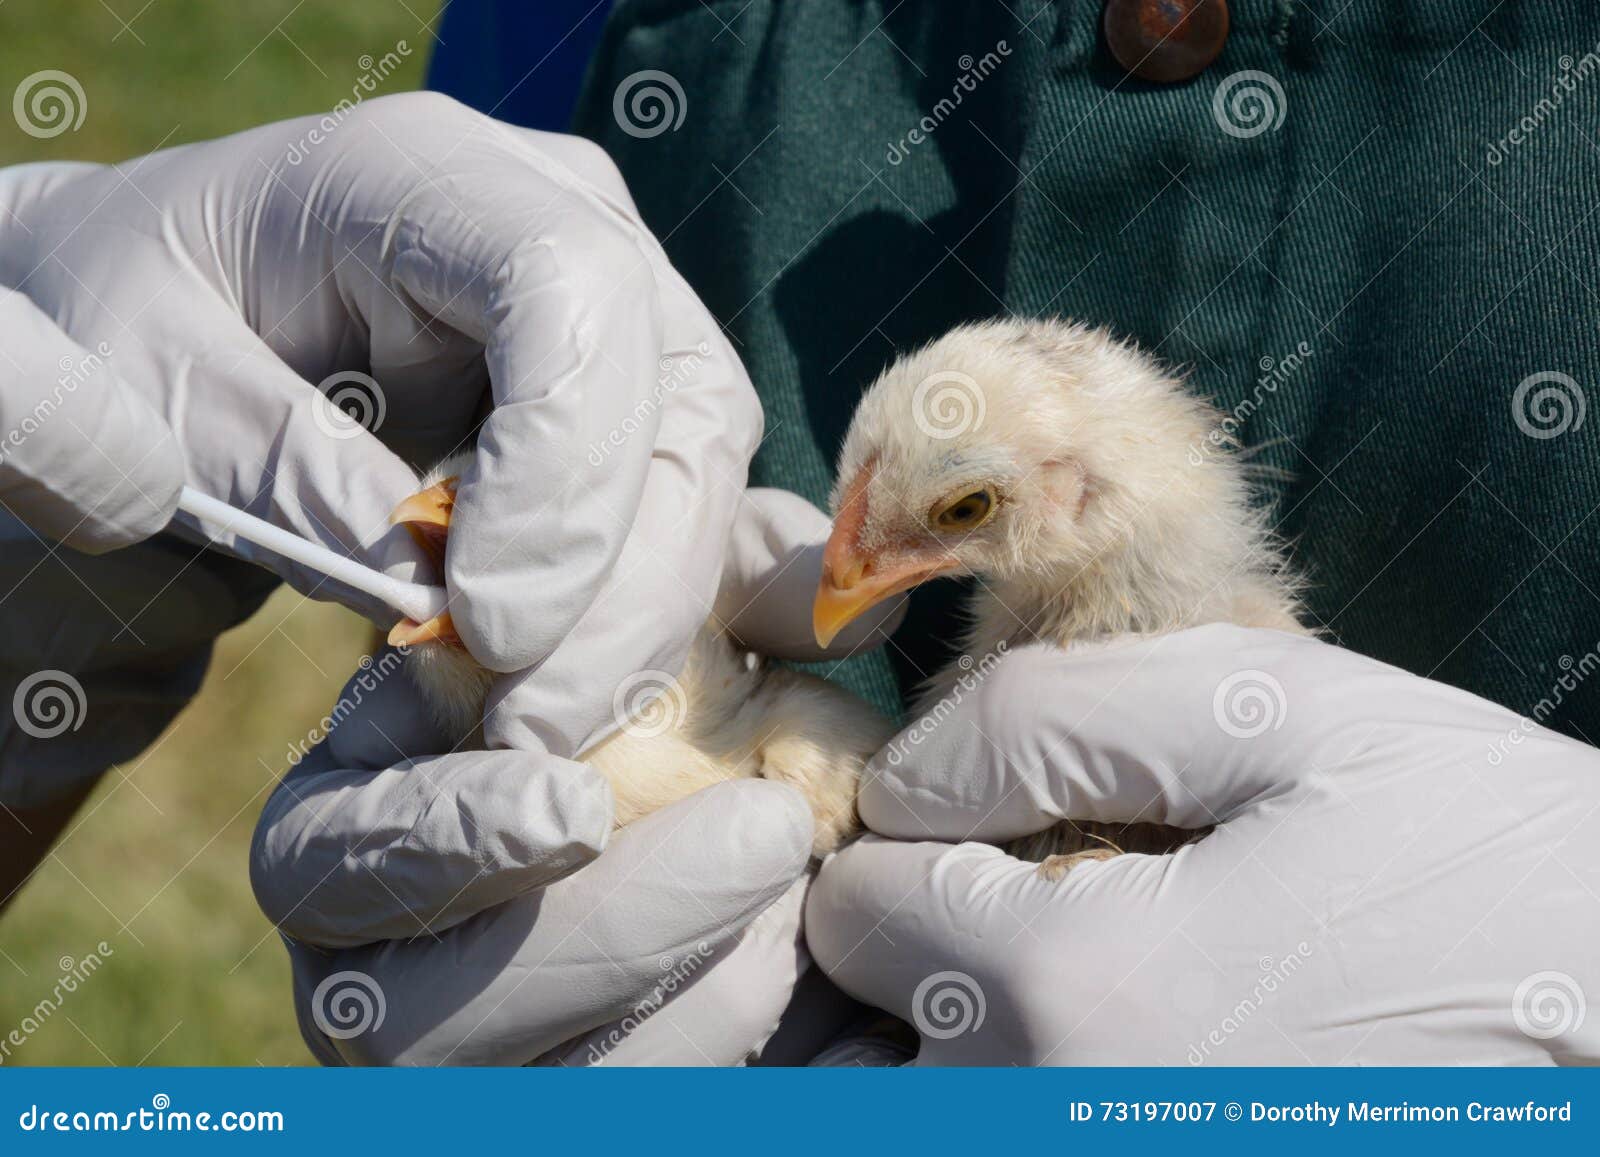 swabbing chicks test for avian influenza